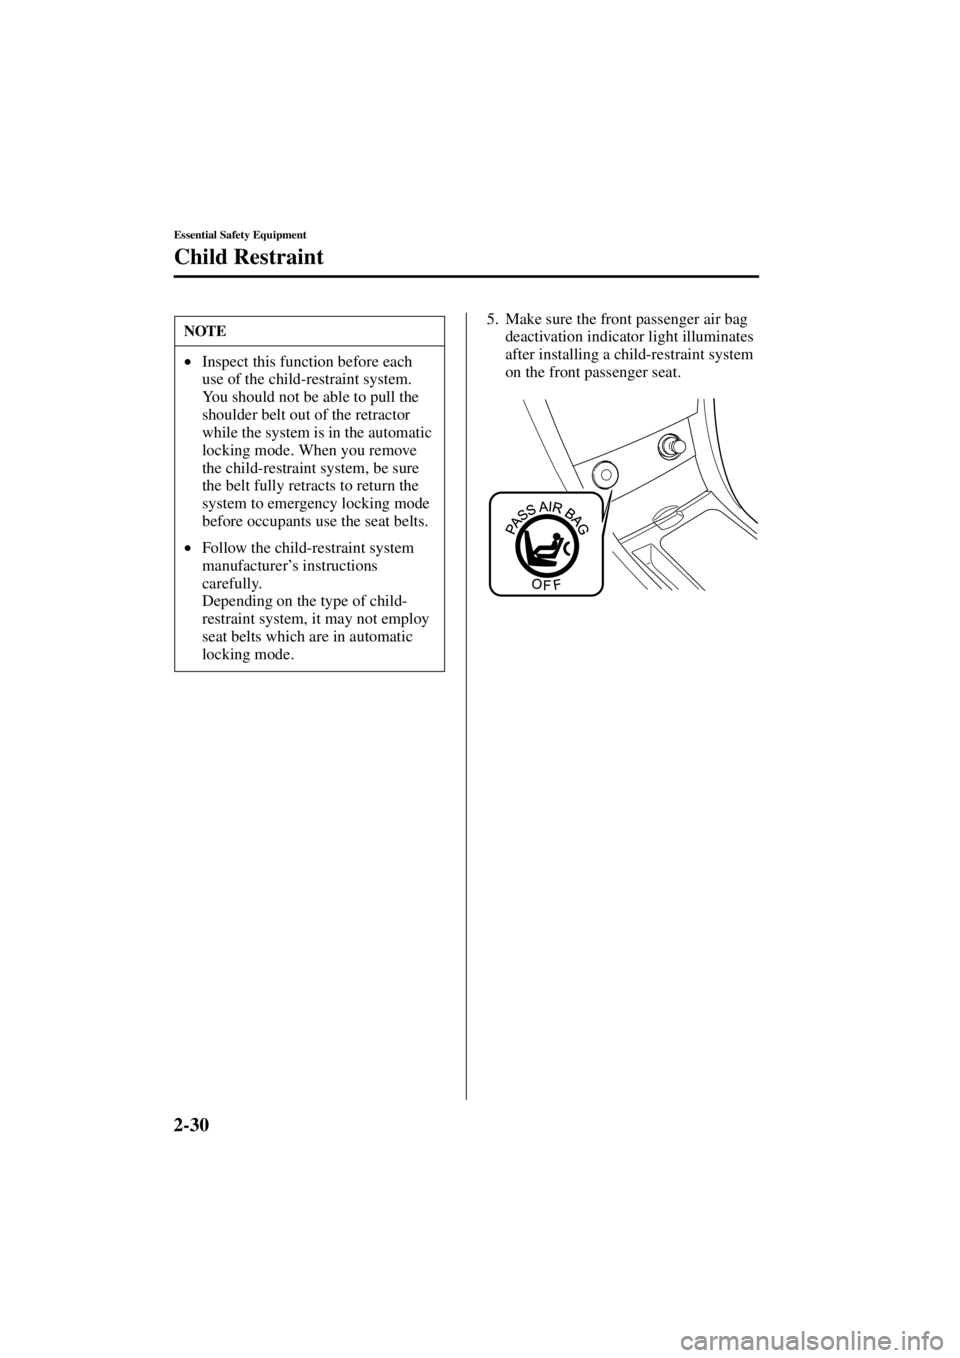 MAZDA MODEL 3 4-DOOR 2004 User Guide 2-30
Essential Safety Equipment
Child Restraint
Form No. 8S18-EA-03I
5. Make sure the front passenger air bag deactivation indicator light illuminates 
after installing a child-restraint system 
on th